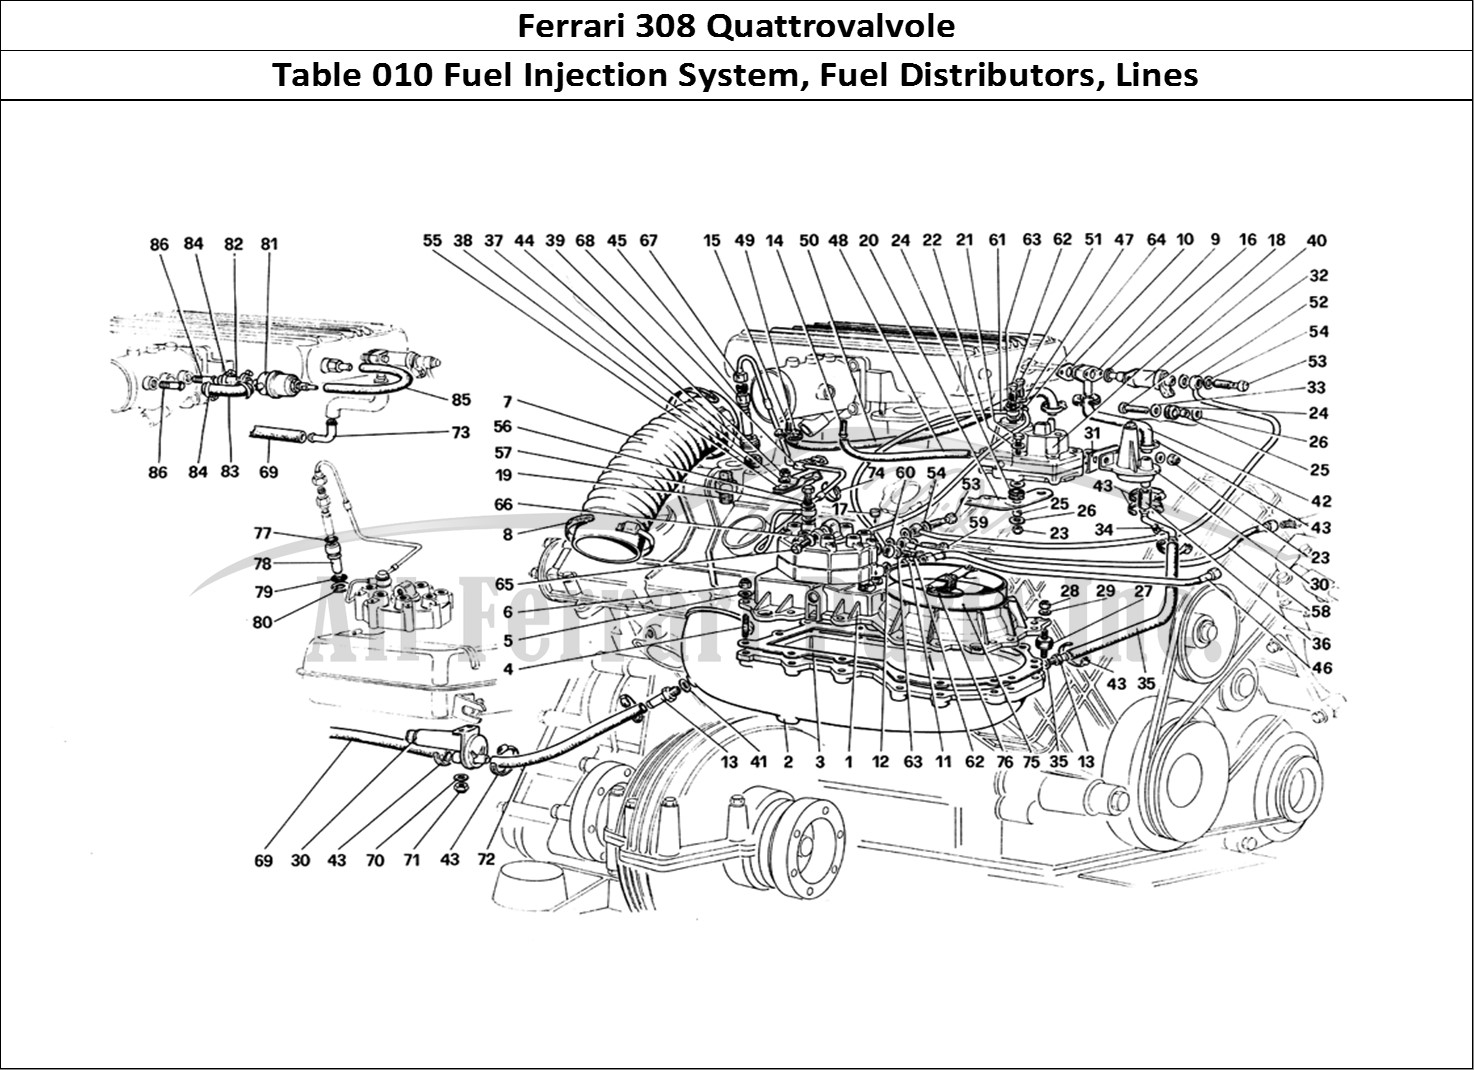 Ferrari Parts Ferrari 308 Quattrovalvole (1985) Page 010 Fuel Injection System - F